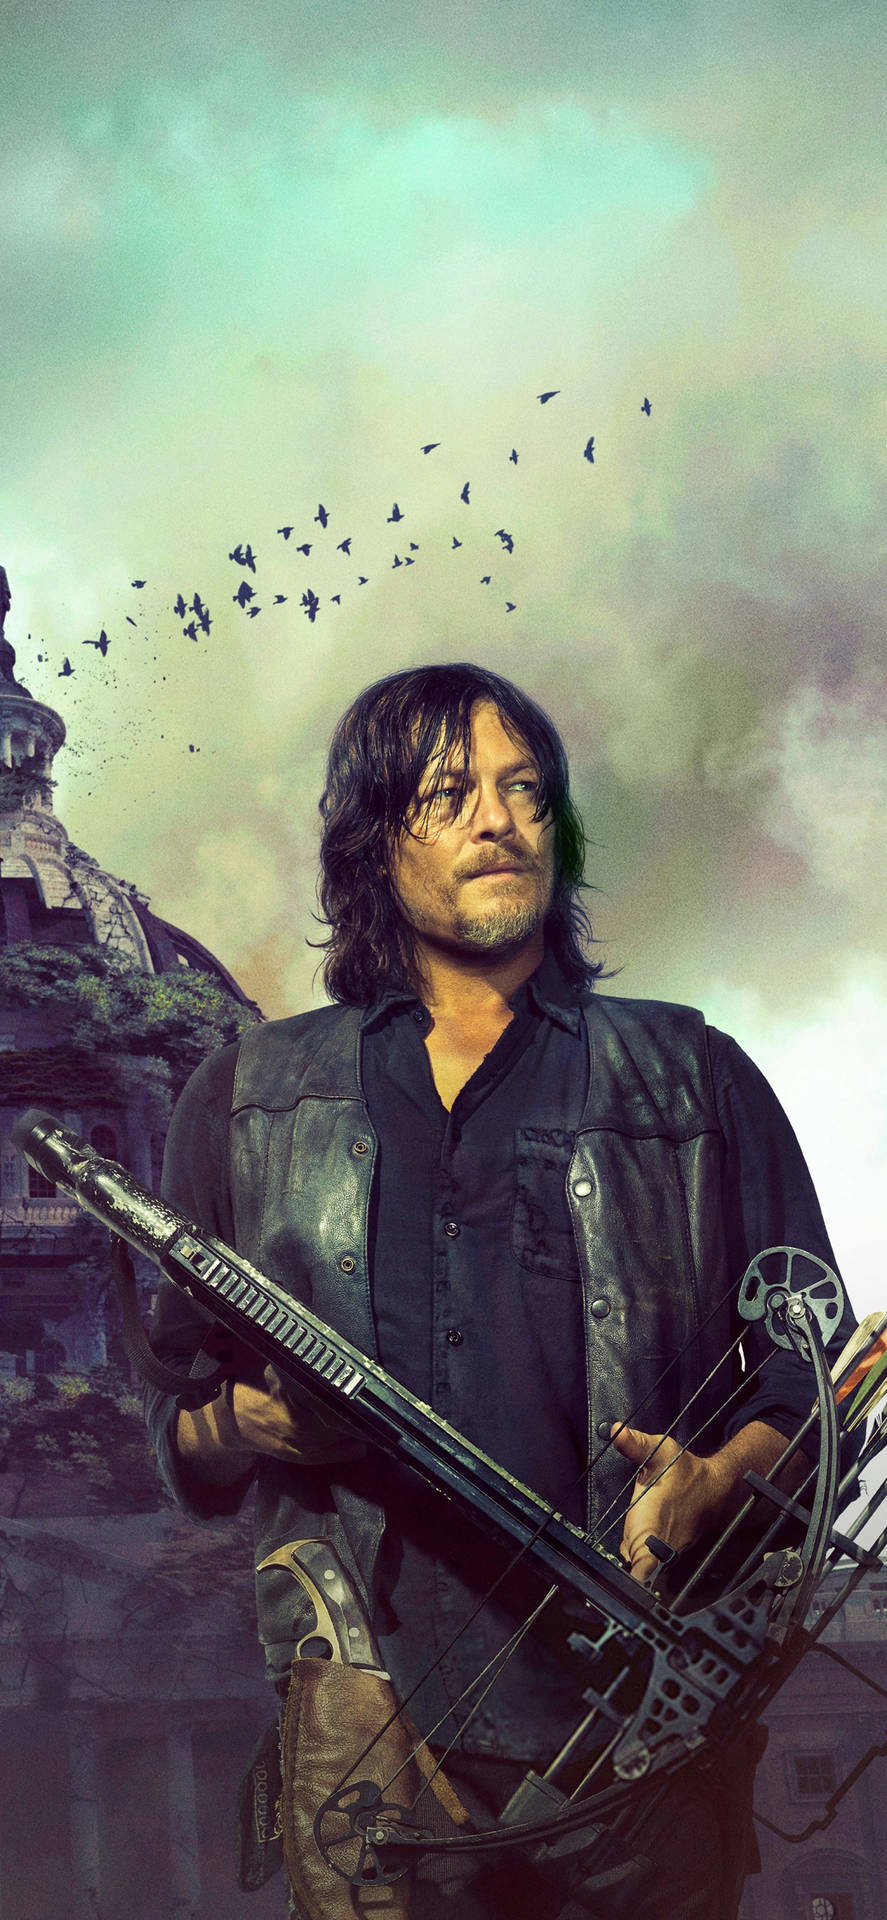 Daryl gør sig klar til en kamp i zombieapokalypsen. Wallpaper